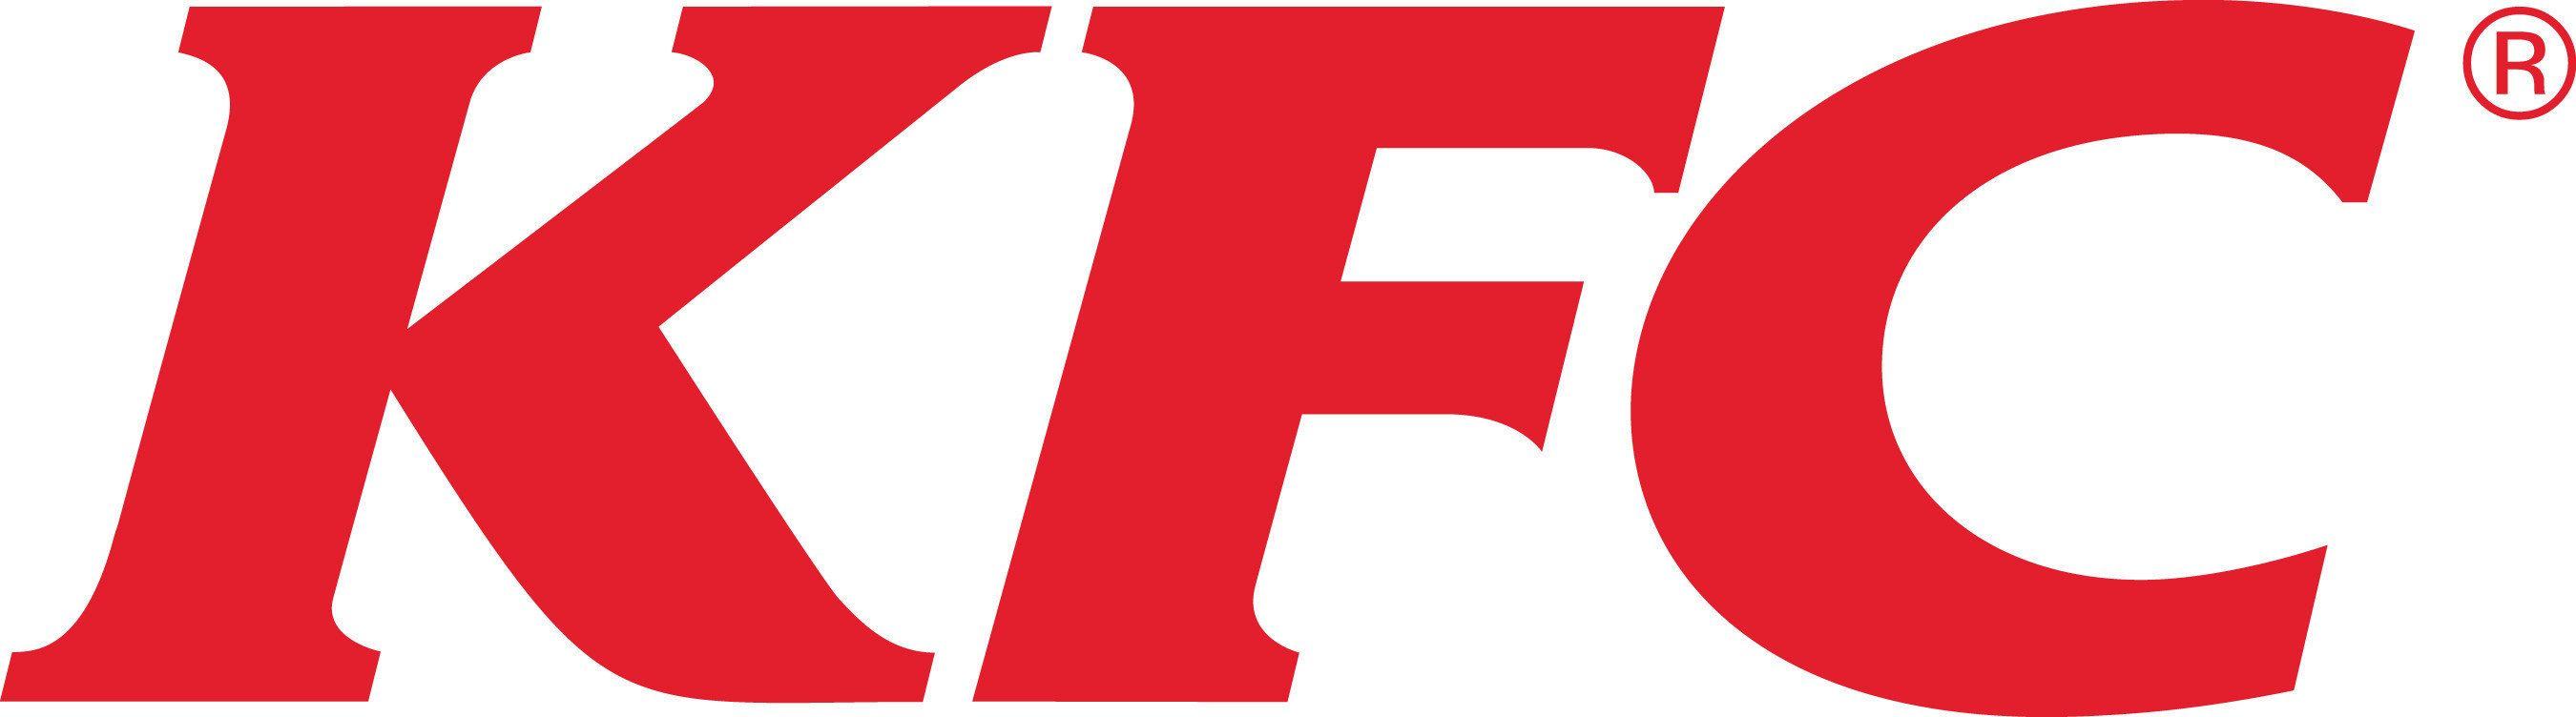 KFC Logo - KFC U.S. Offers First Ever Bucket For Two